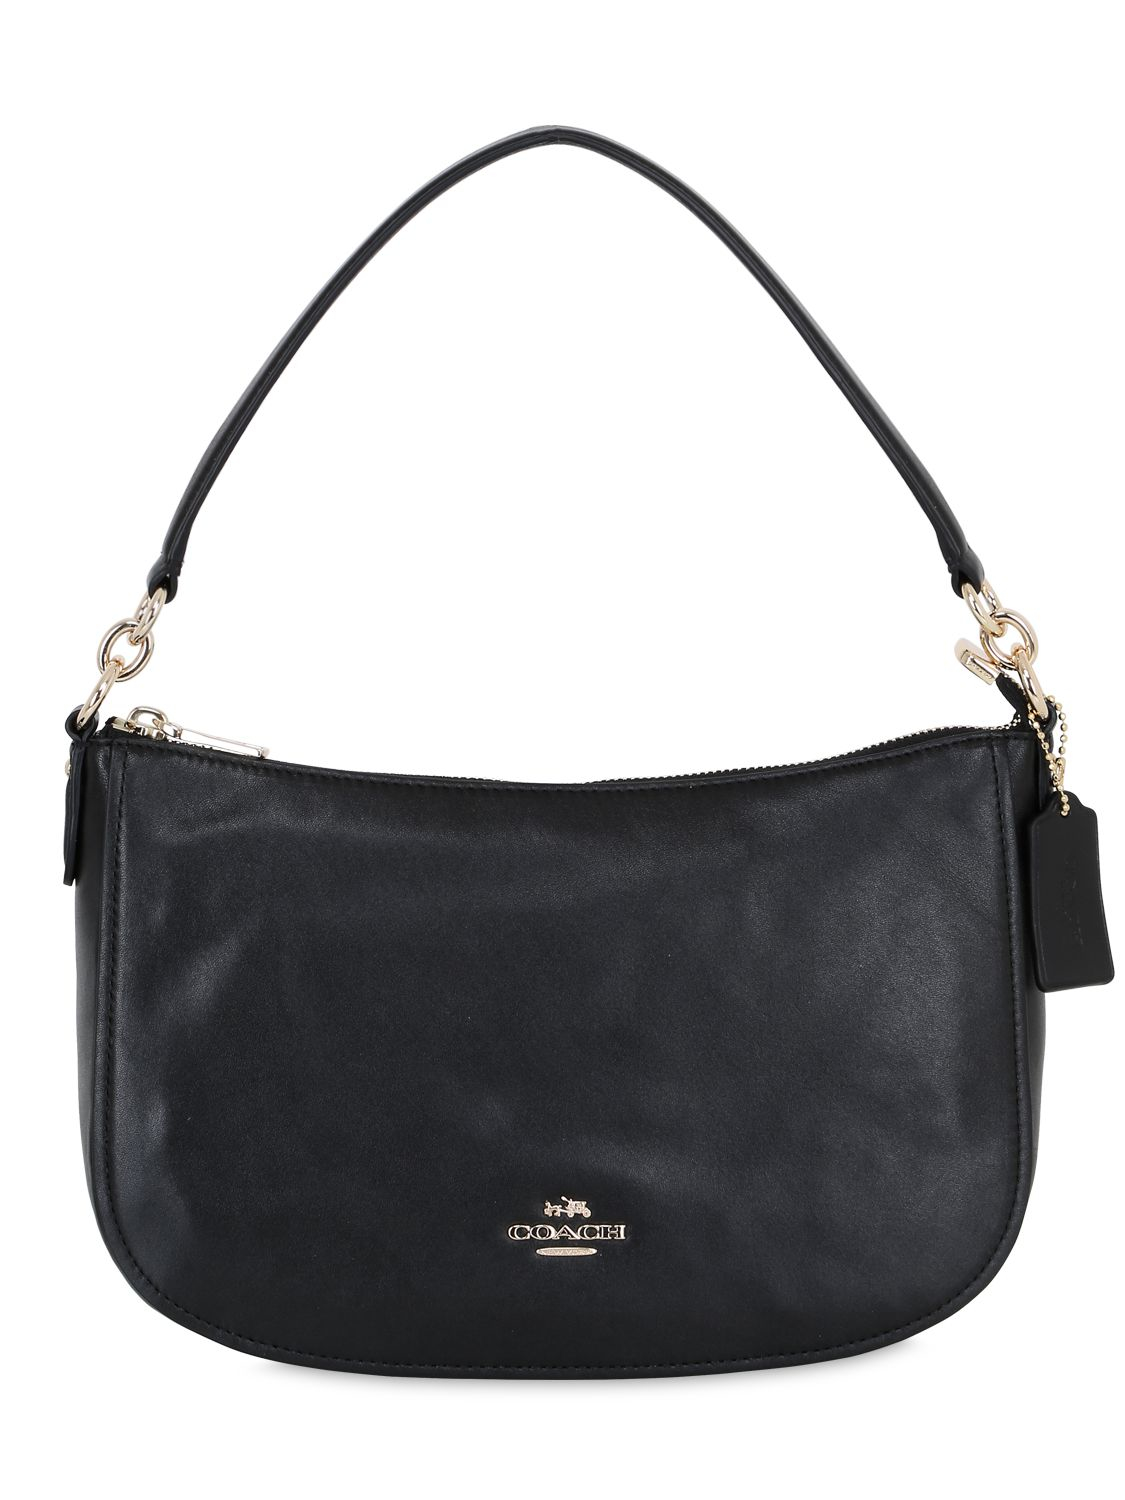 Coach Chelsea Smooth Leather Shoulder Bag in Multicolor (BLACK) | Lyst